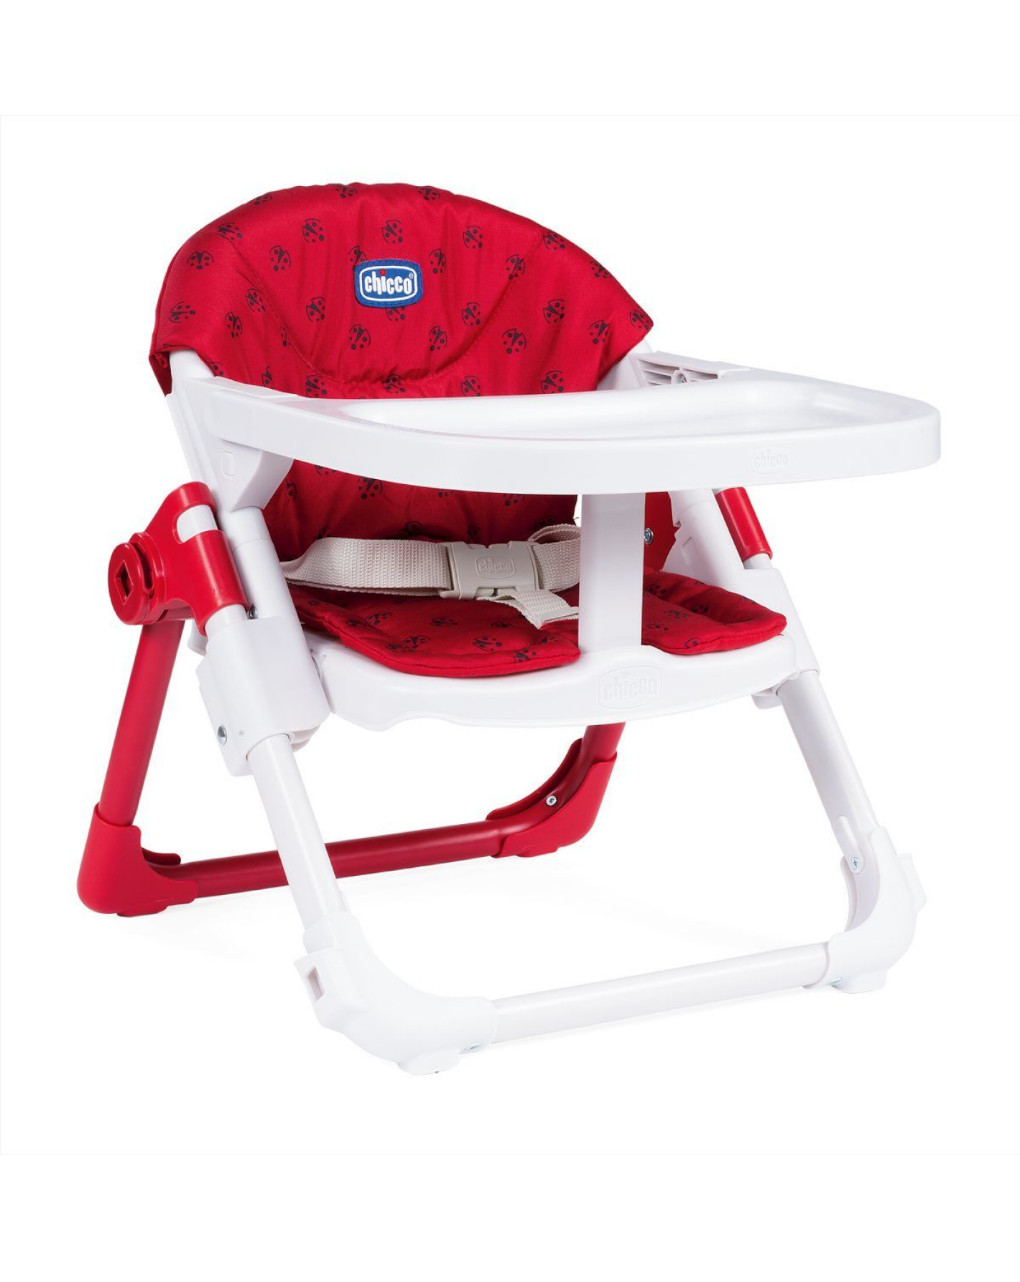 Rialzo sedia chairy ladybug - Chicco